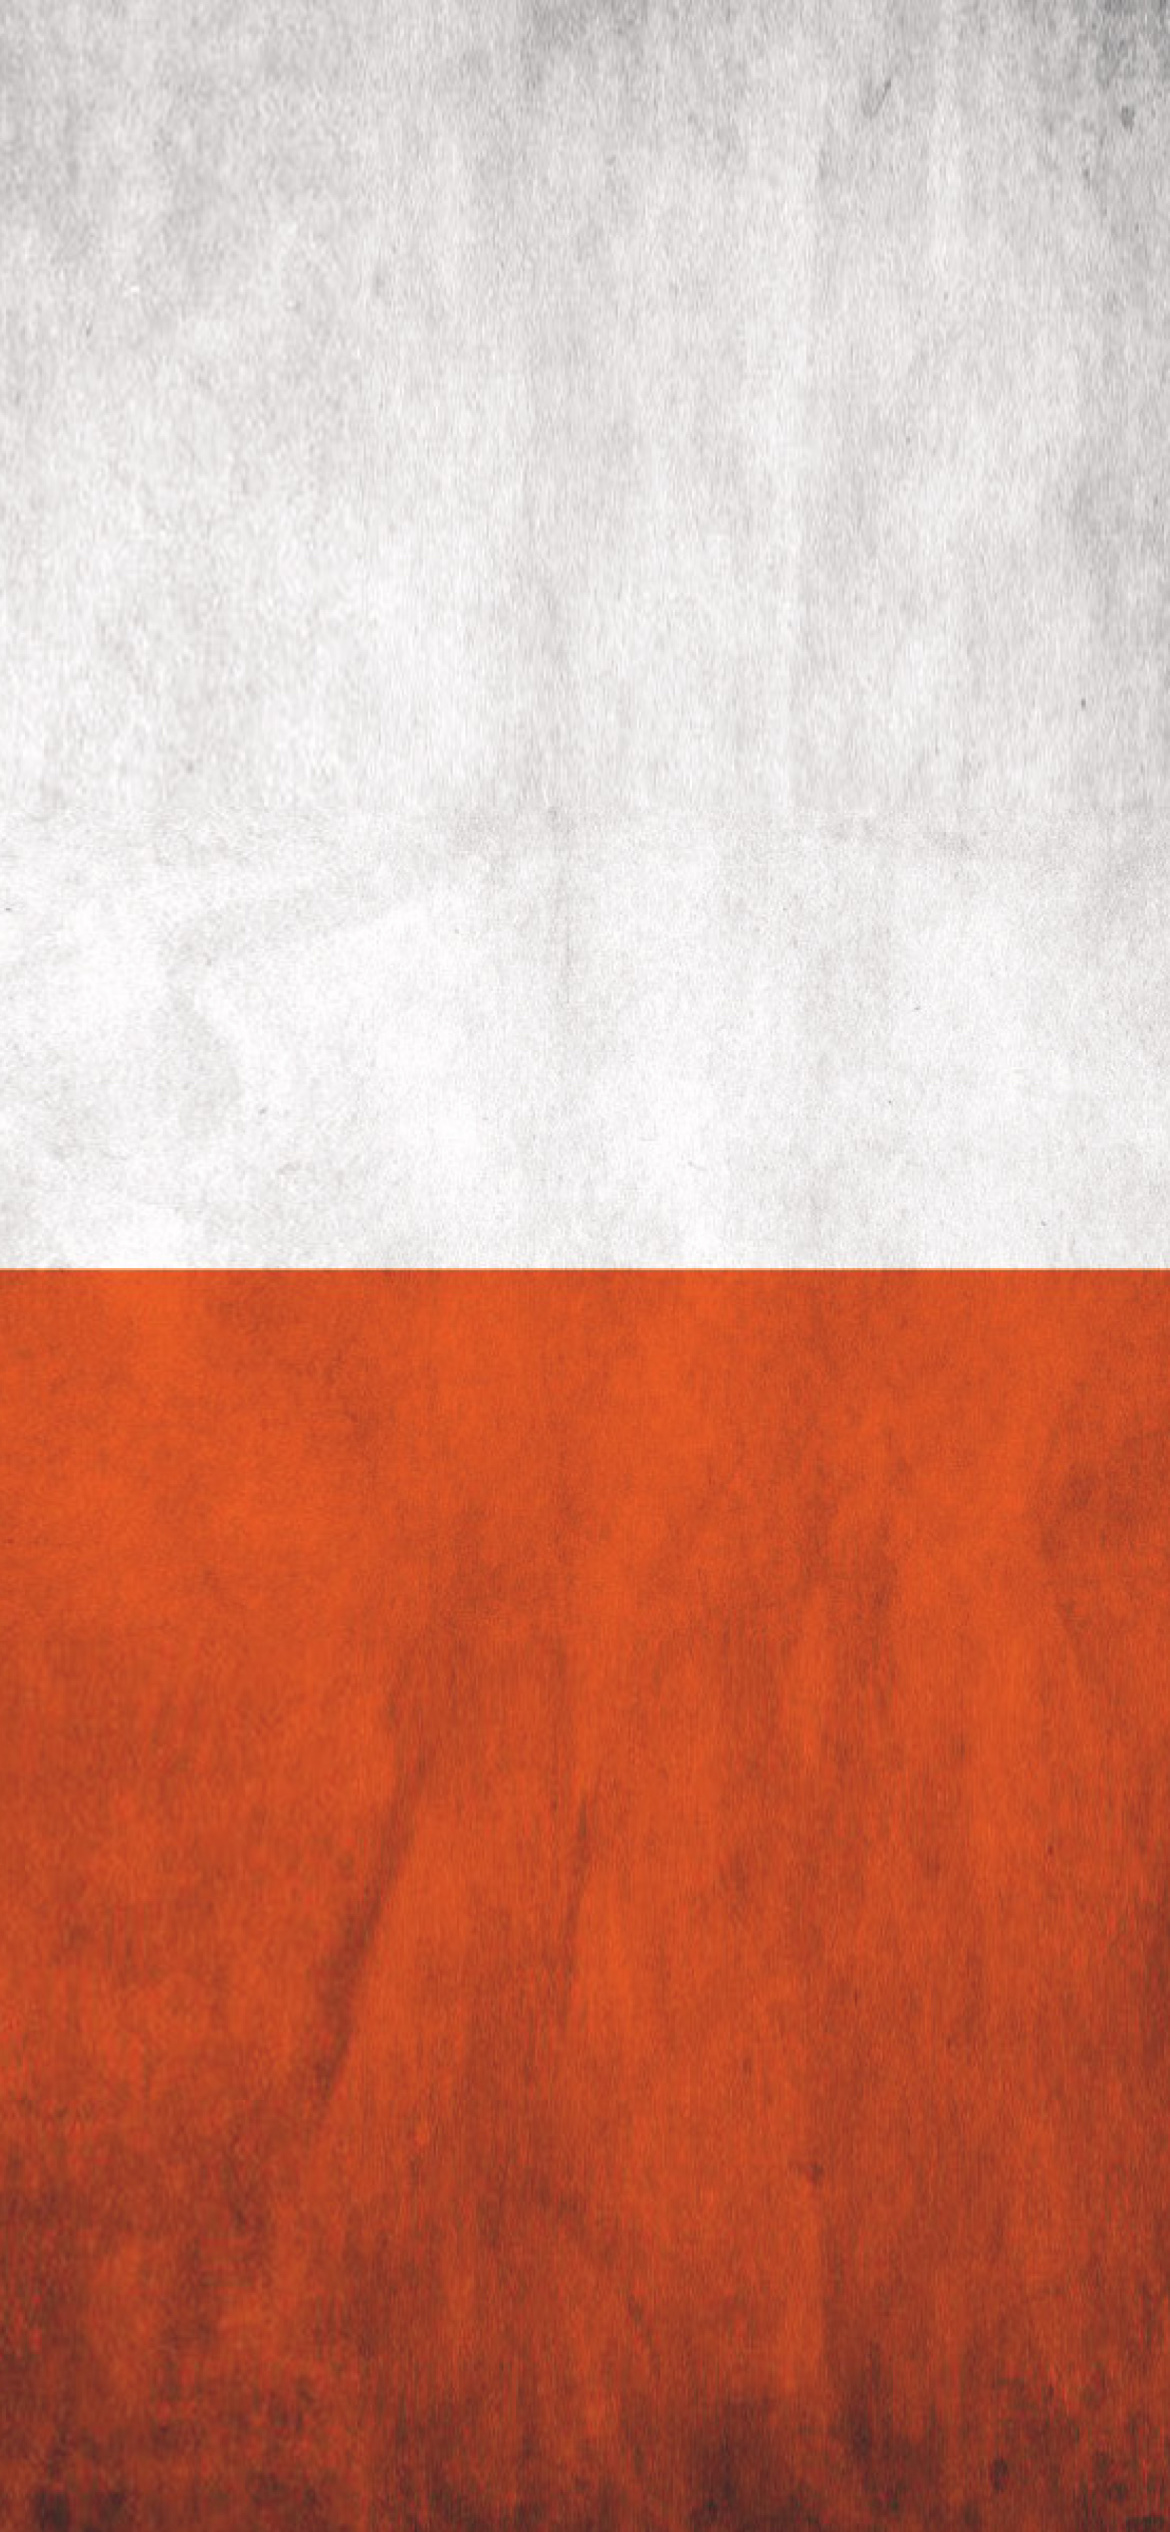 Poland Flag wallpaper 1170x2532